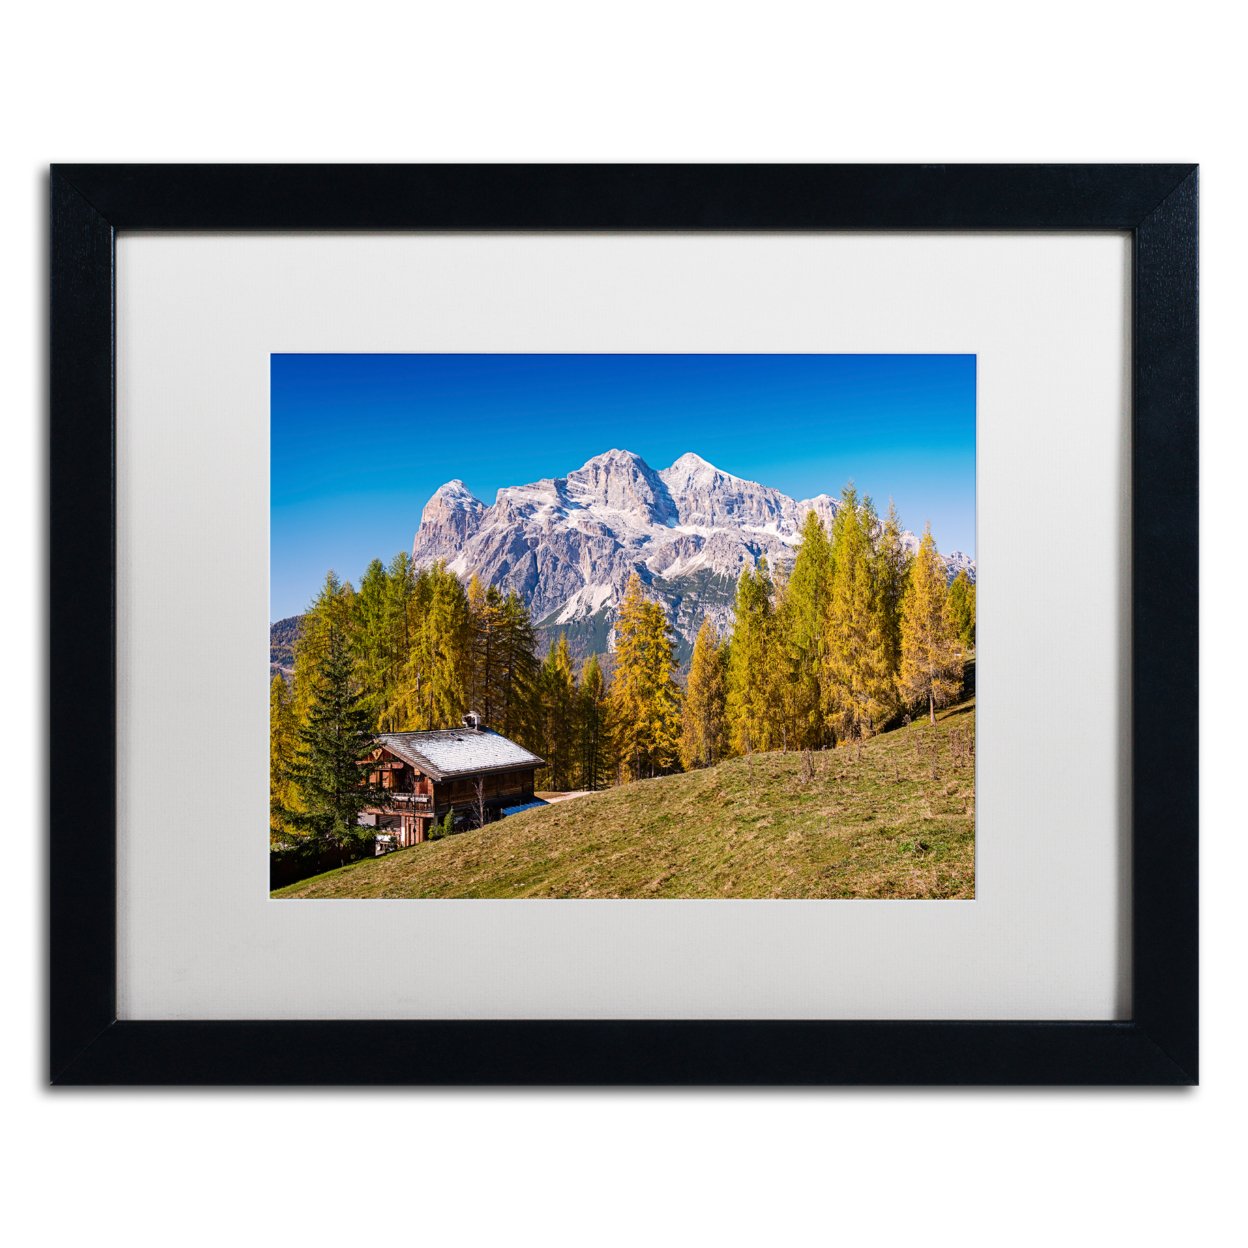 Michael Blanchette Photography 'Alpine Chalet' Black Wooden Framed Art 18 X 22 Inches